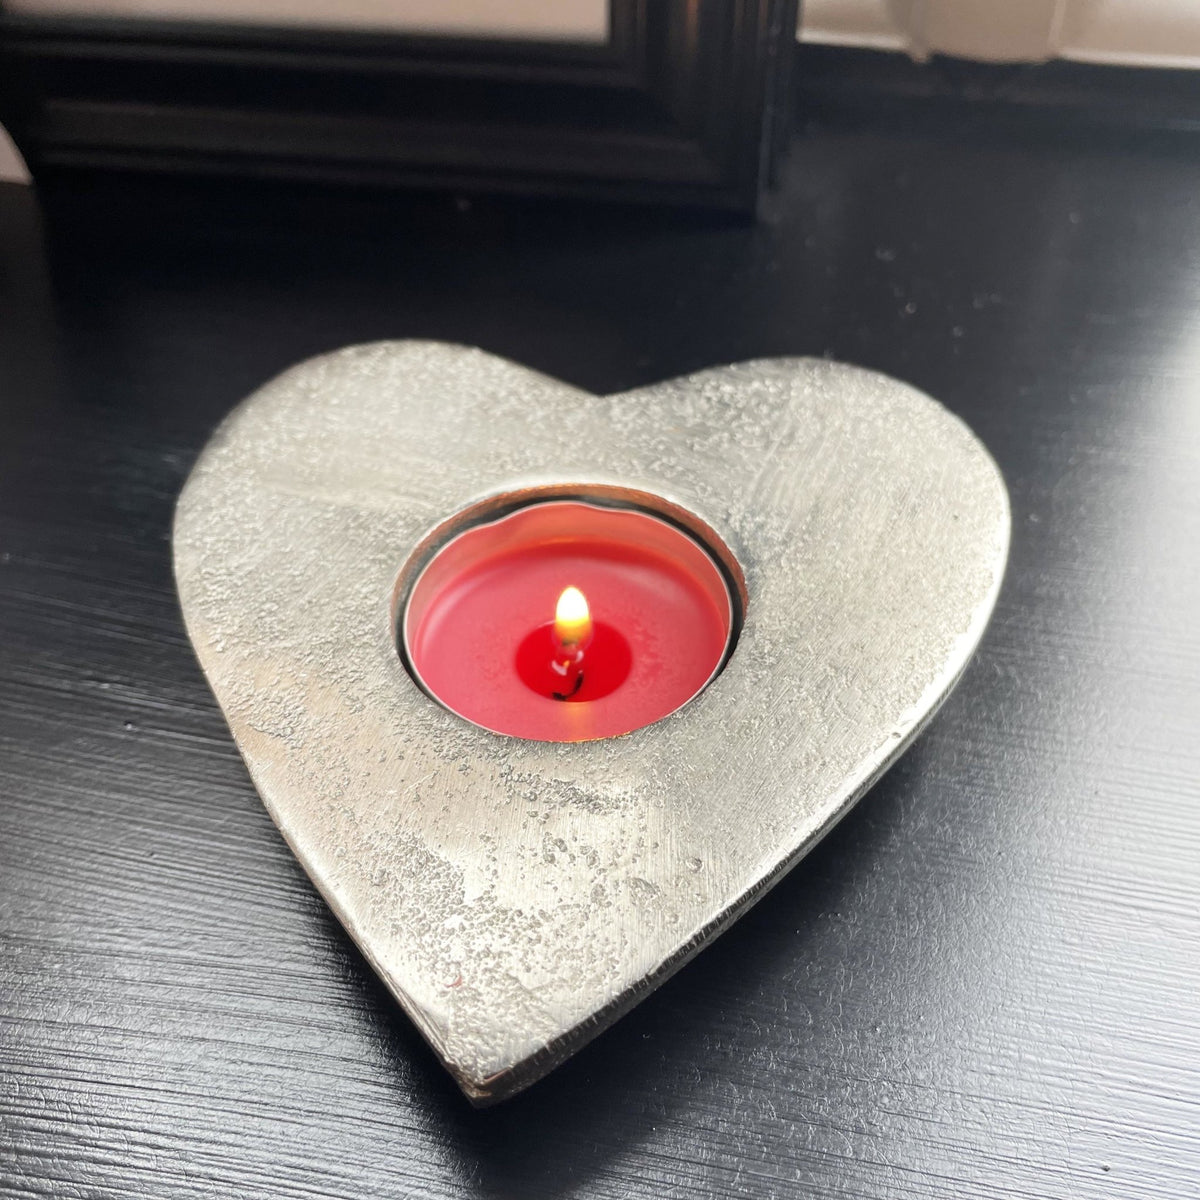 Silver Aluminium Heart Tea Light Holder with candle lit